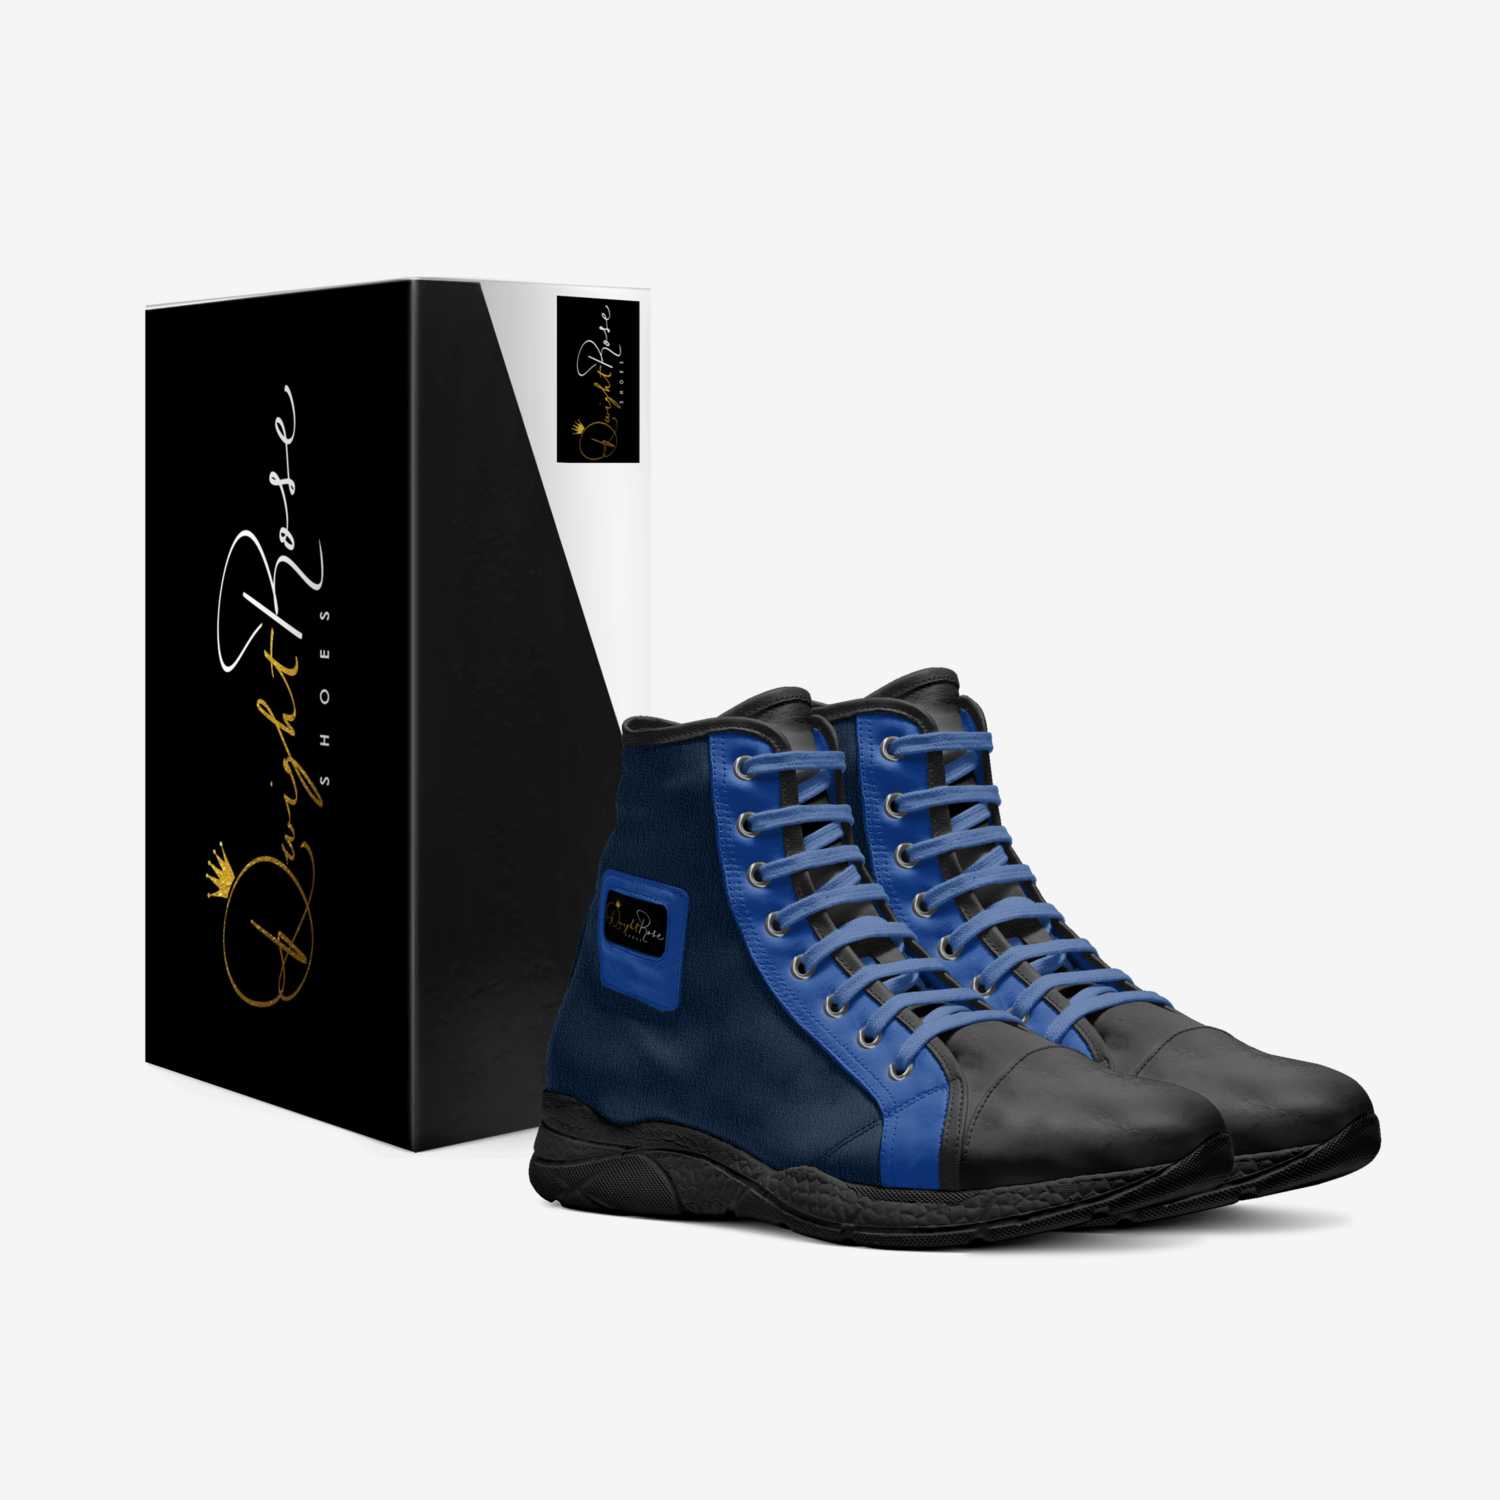 Dr. Nasir custom made in Italy shoes by Ra-hana Worsley | Box view